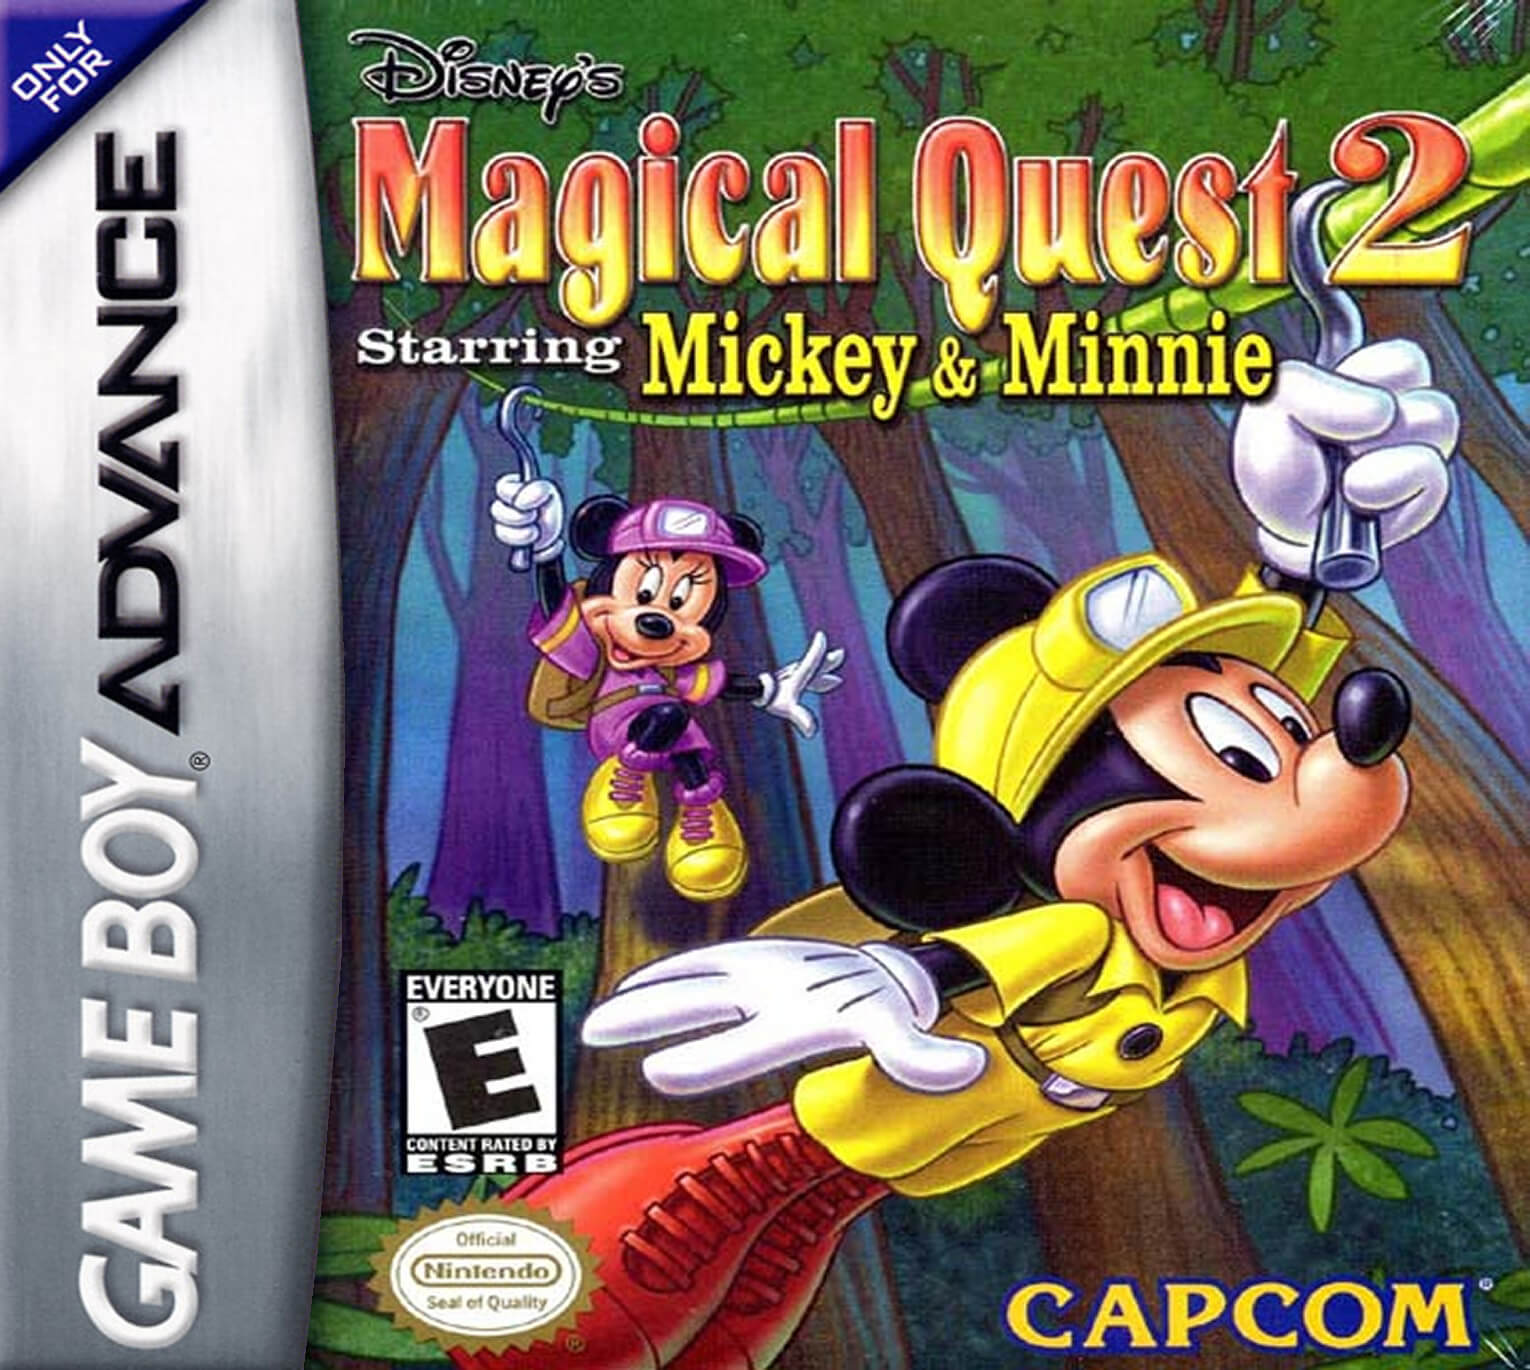 Disney’s Magical Quest 2 Starring Mickey & Minnie